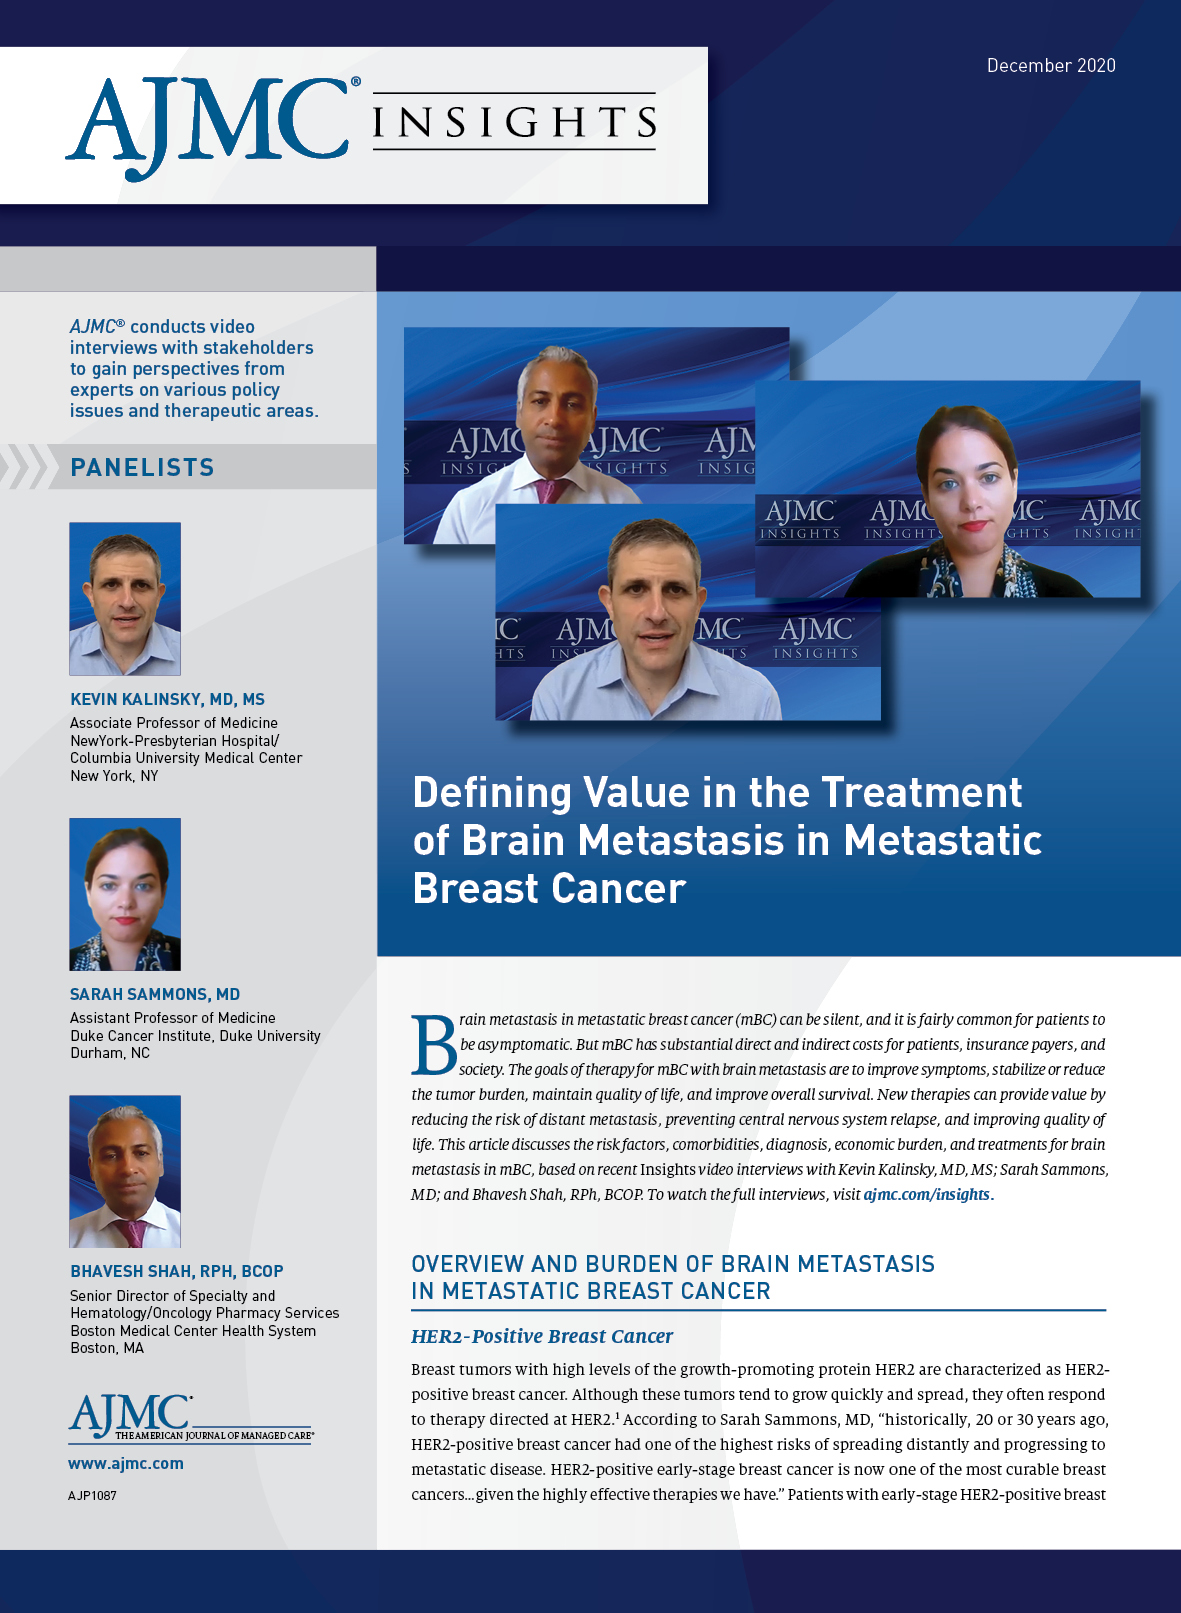 Defining Value in the Treatment of Brain Metastasis in Metastatic Breast Cancer